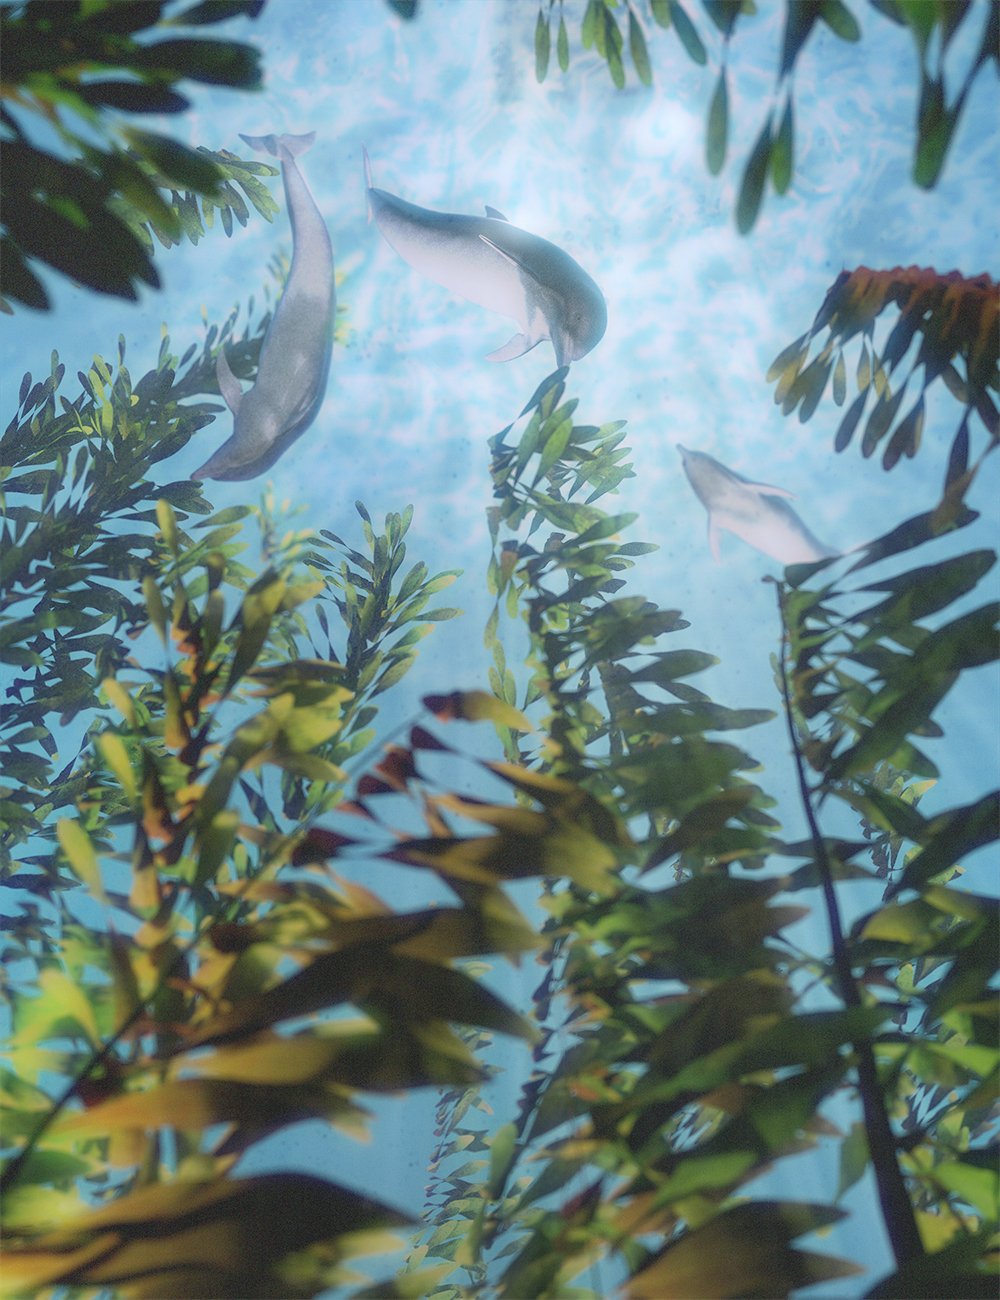 Just Beachy - Underwater Kelp Forest by: MartinJFrost, 3D Models by Daz 3D